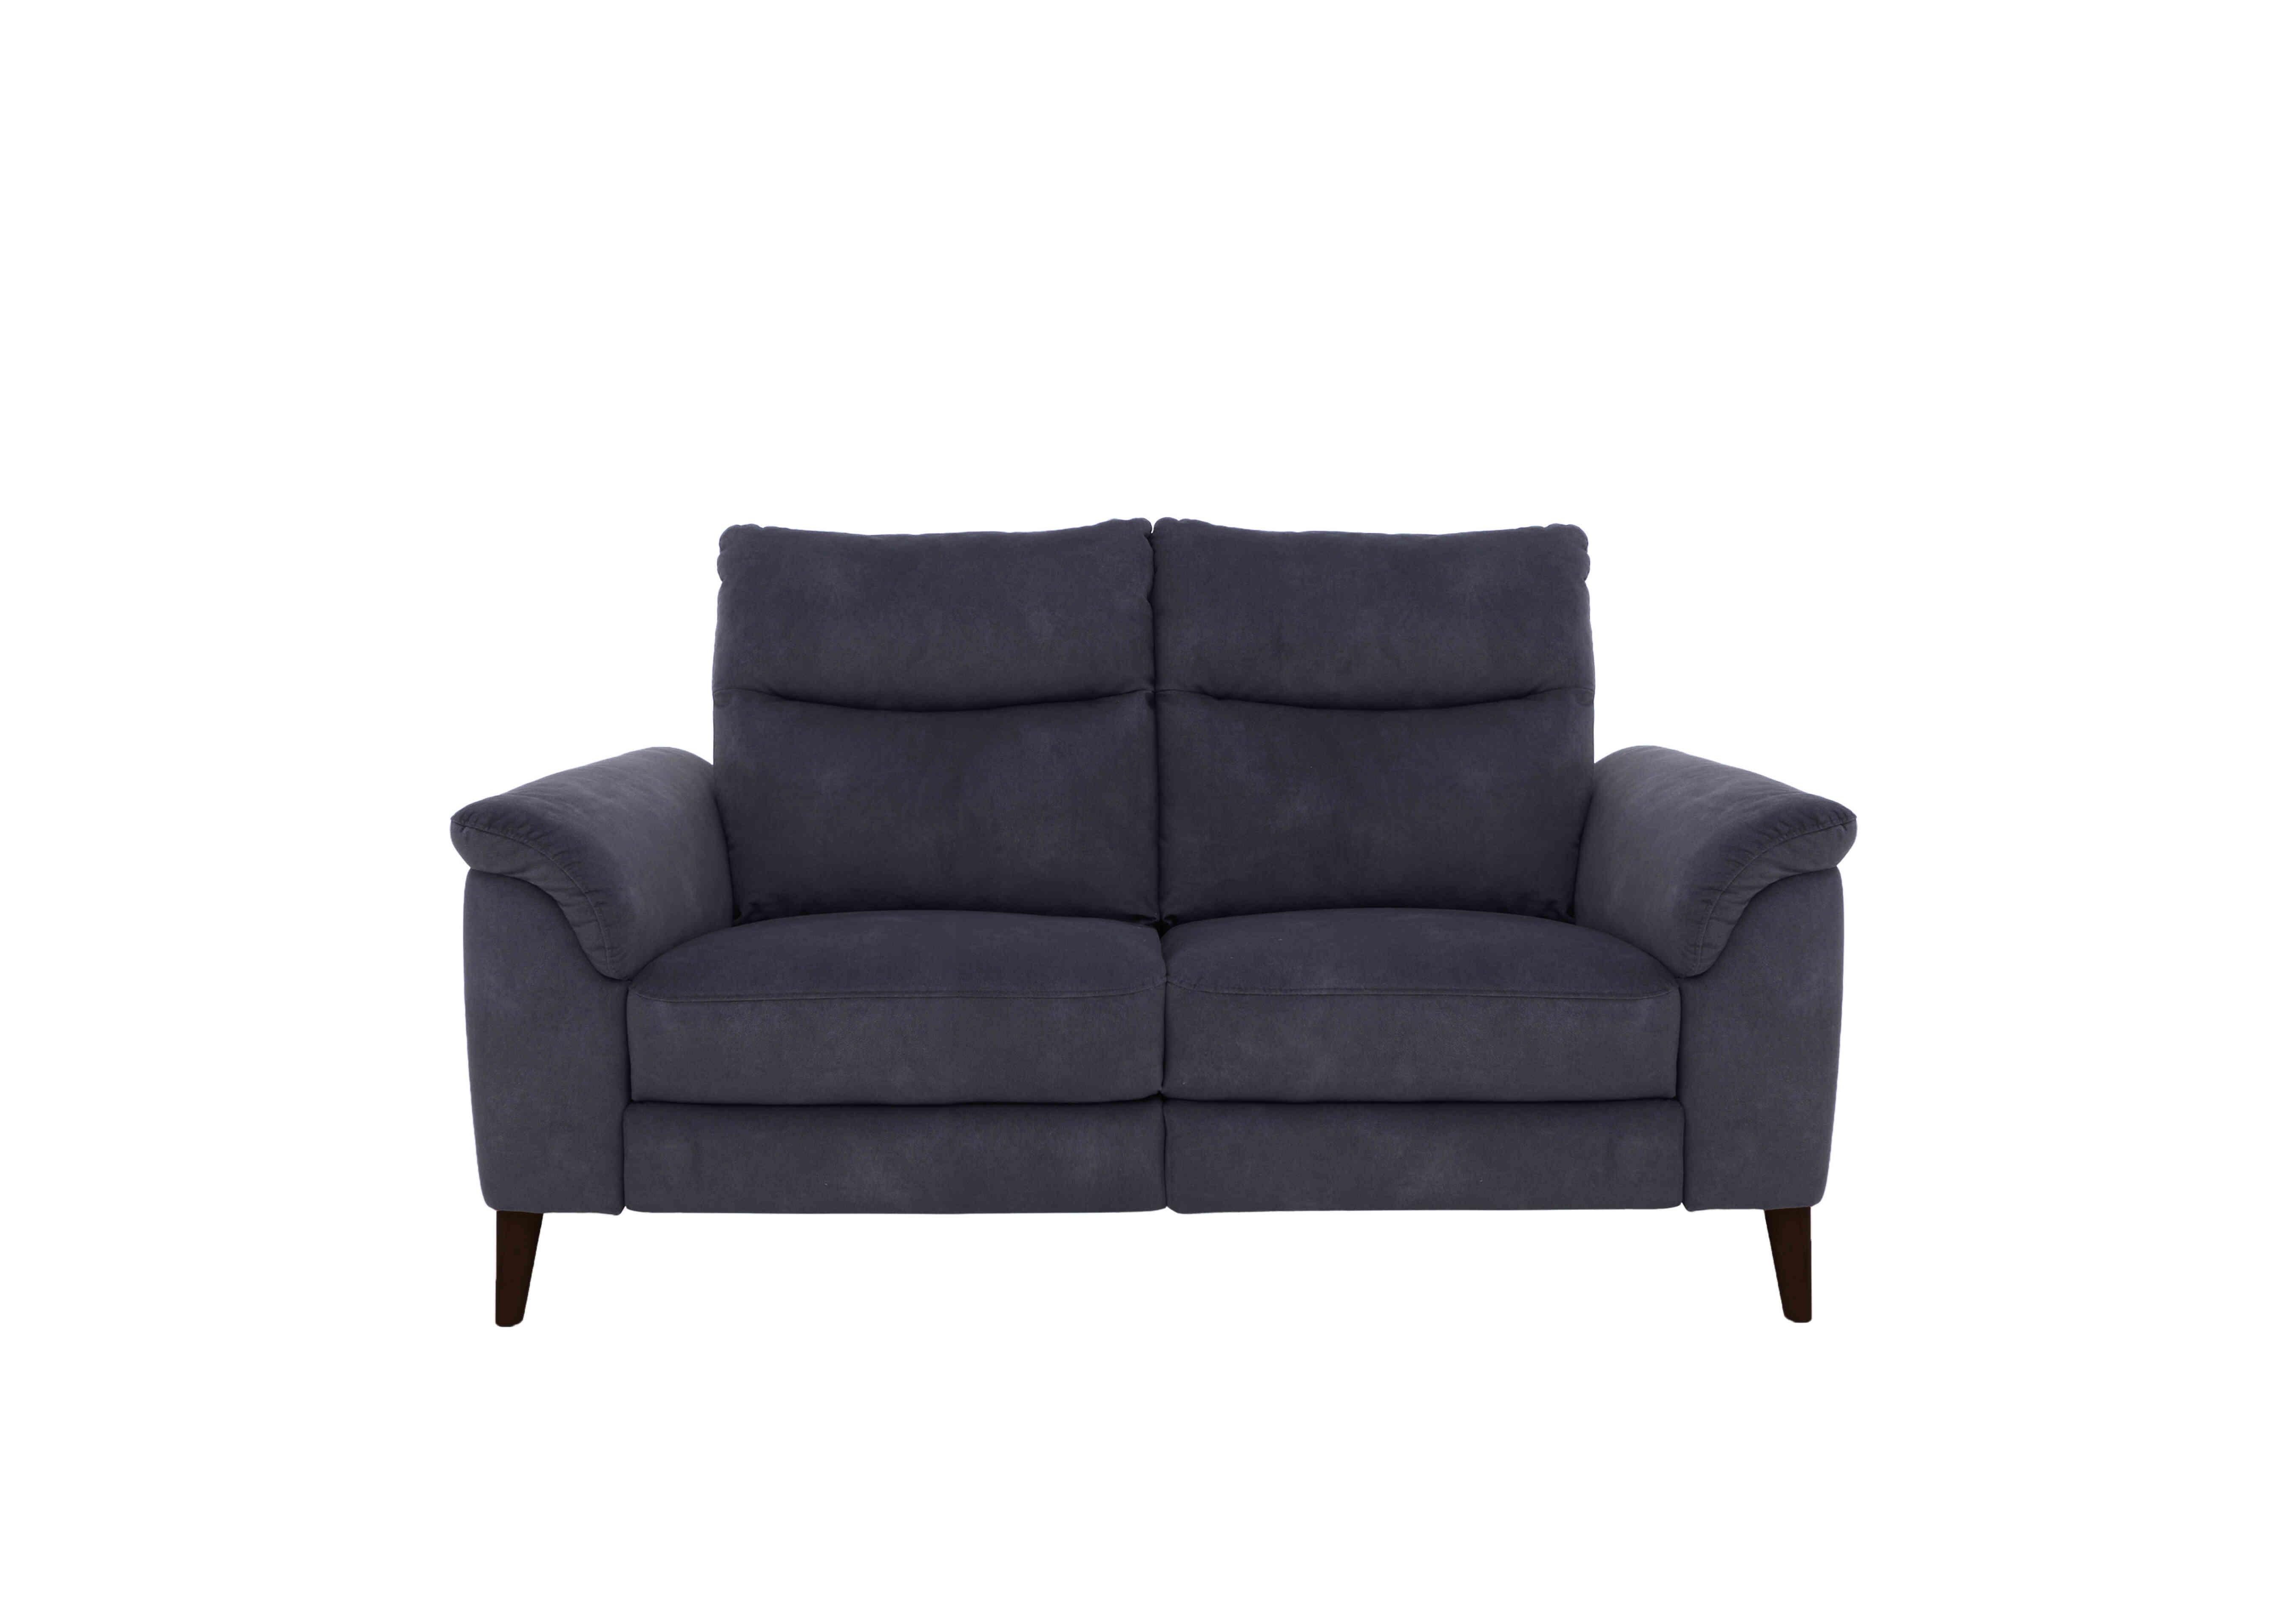 Morgan 2 Seater Fabric Sofa in Shadow Dexter 19 43519 on Furniture Village